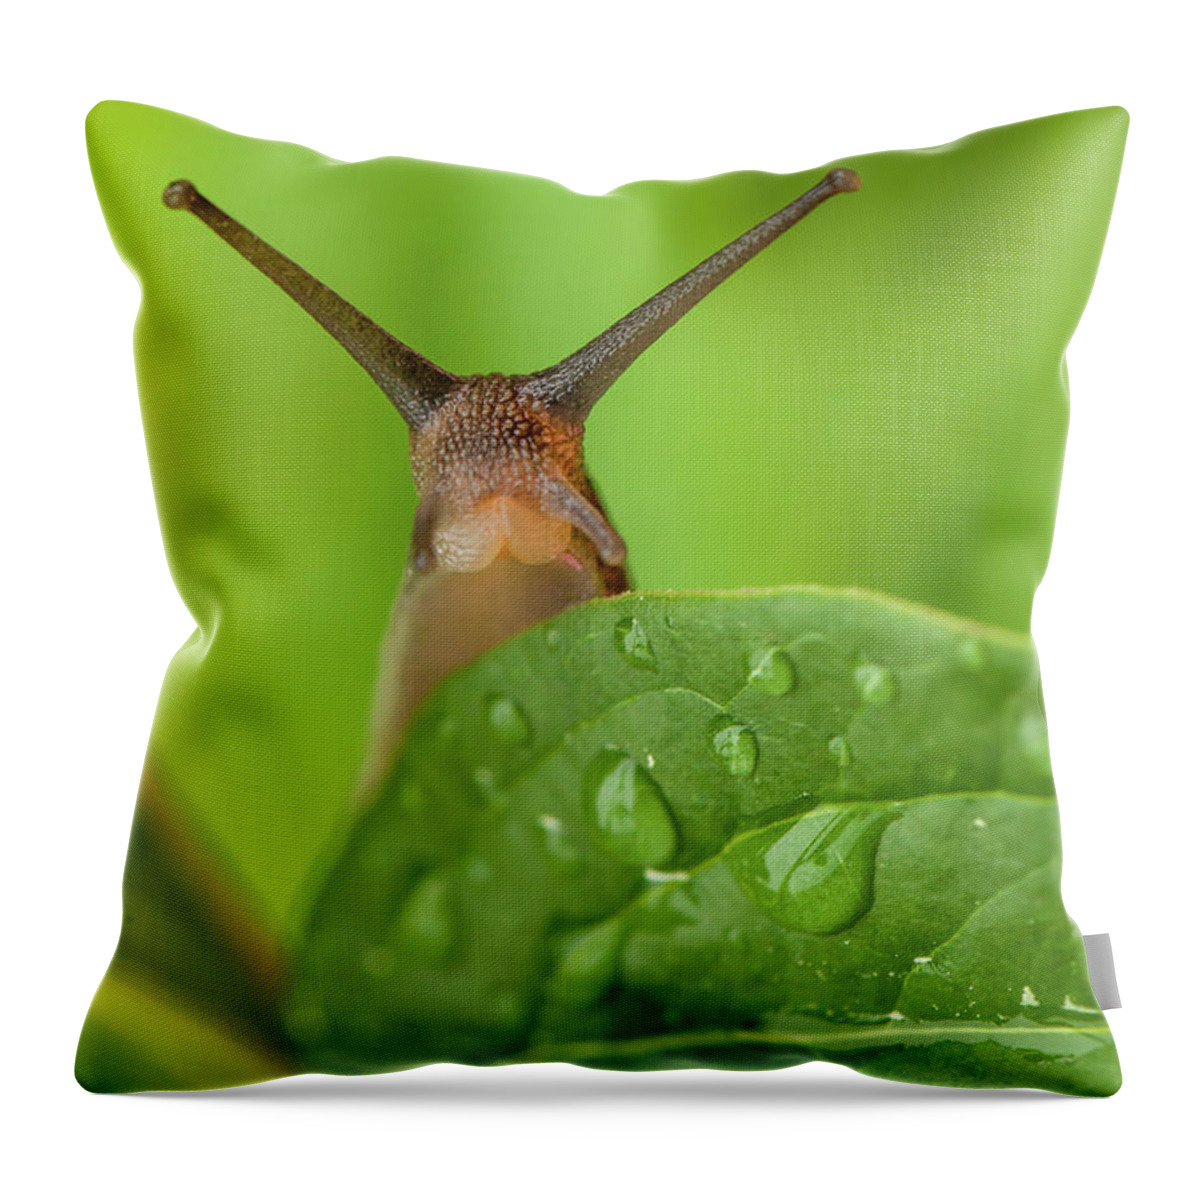 Garden Throw Pillow featuring the photograph Cute garden snail long tentacles on leaf by Simon Bratt